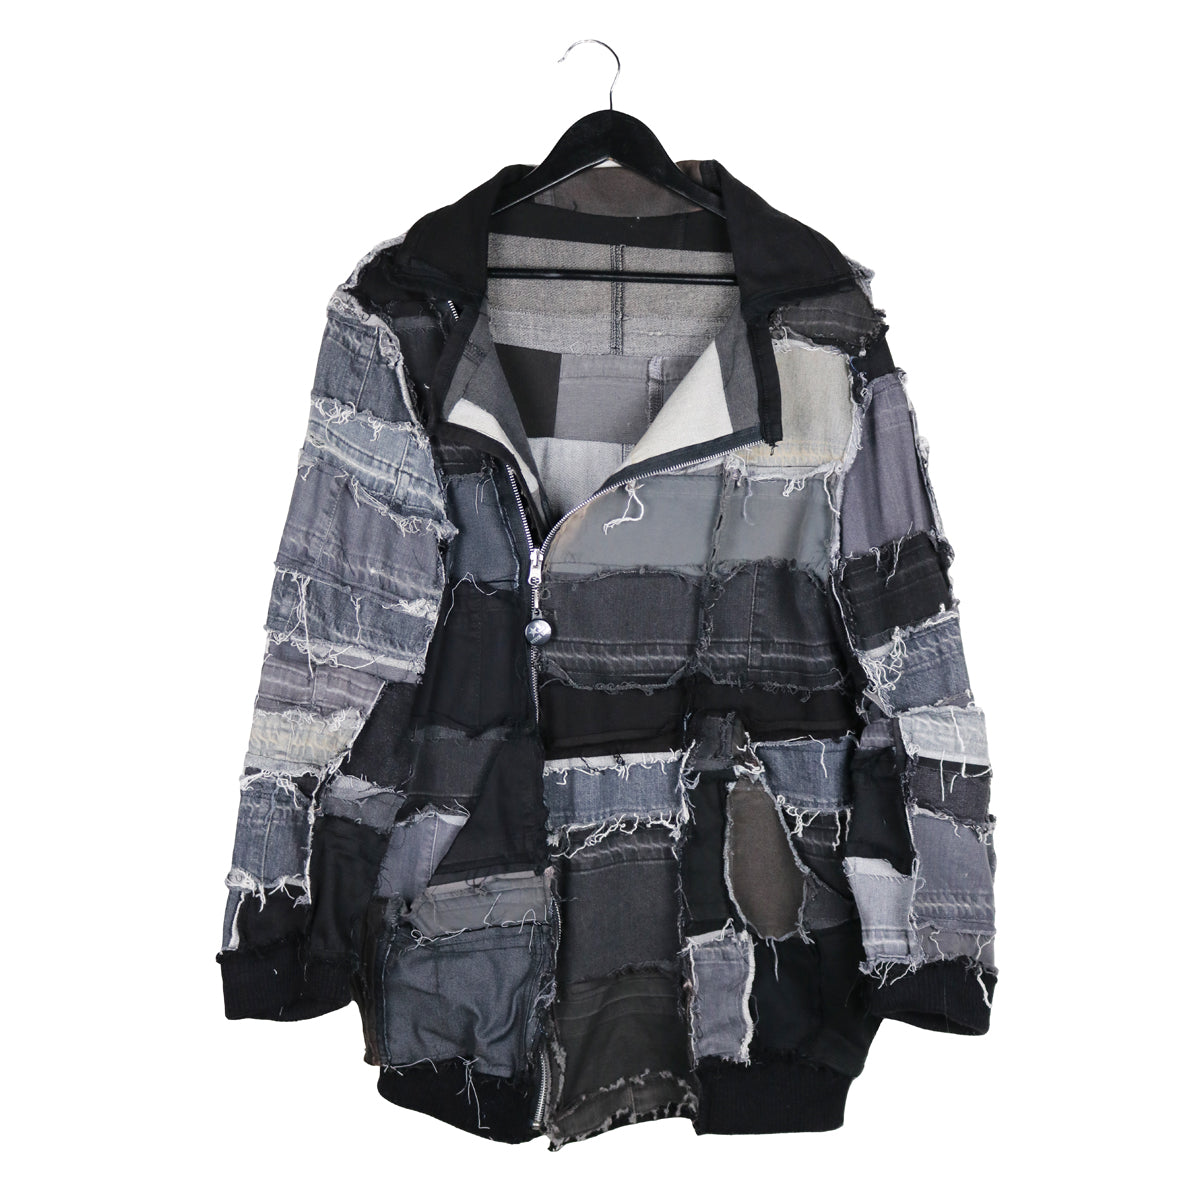 gray upcycled denim jacket by fashion designer stevie leigh